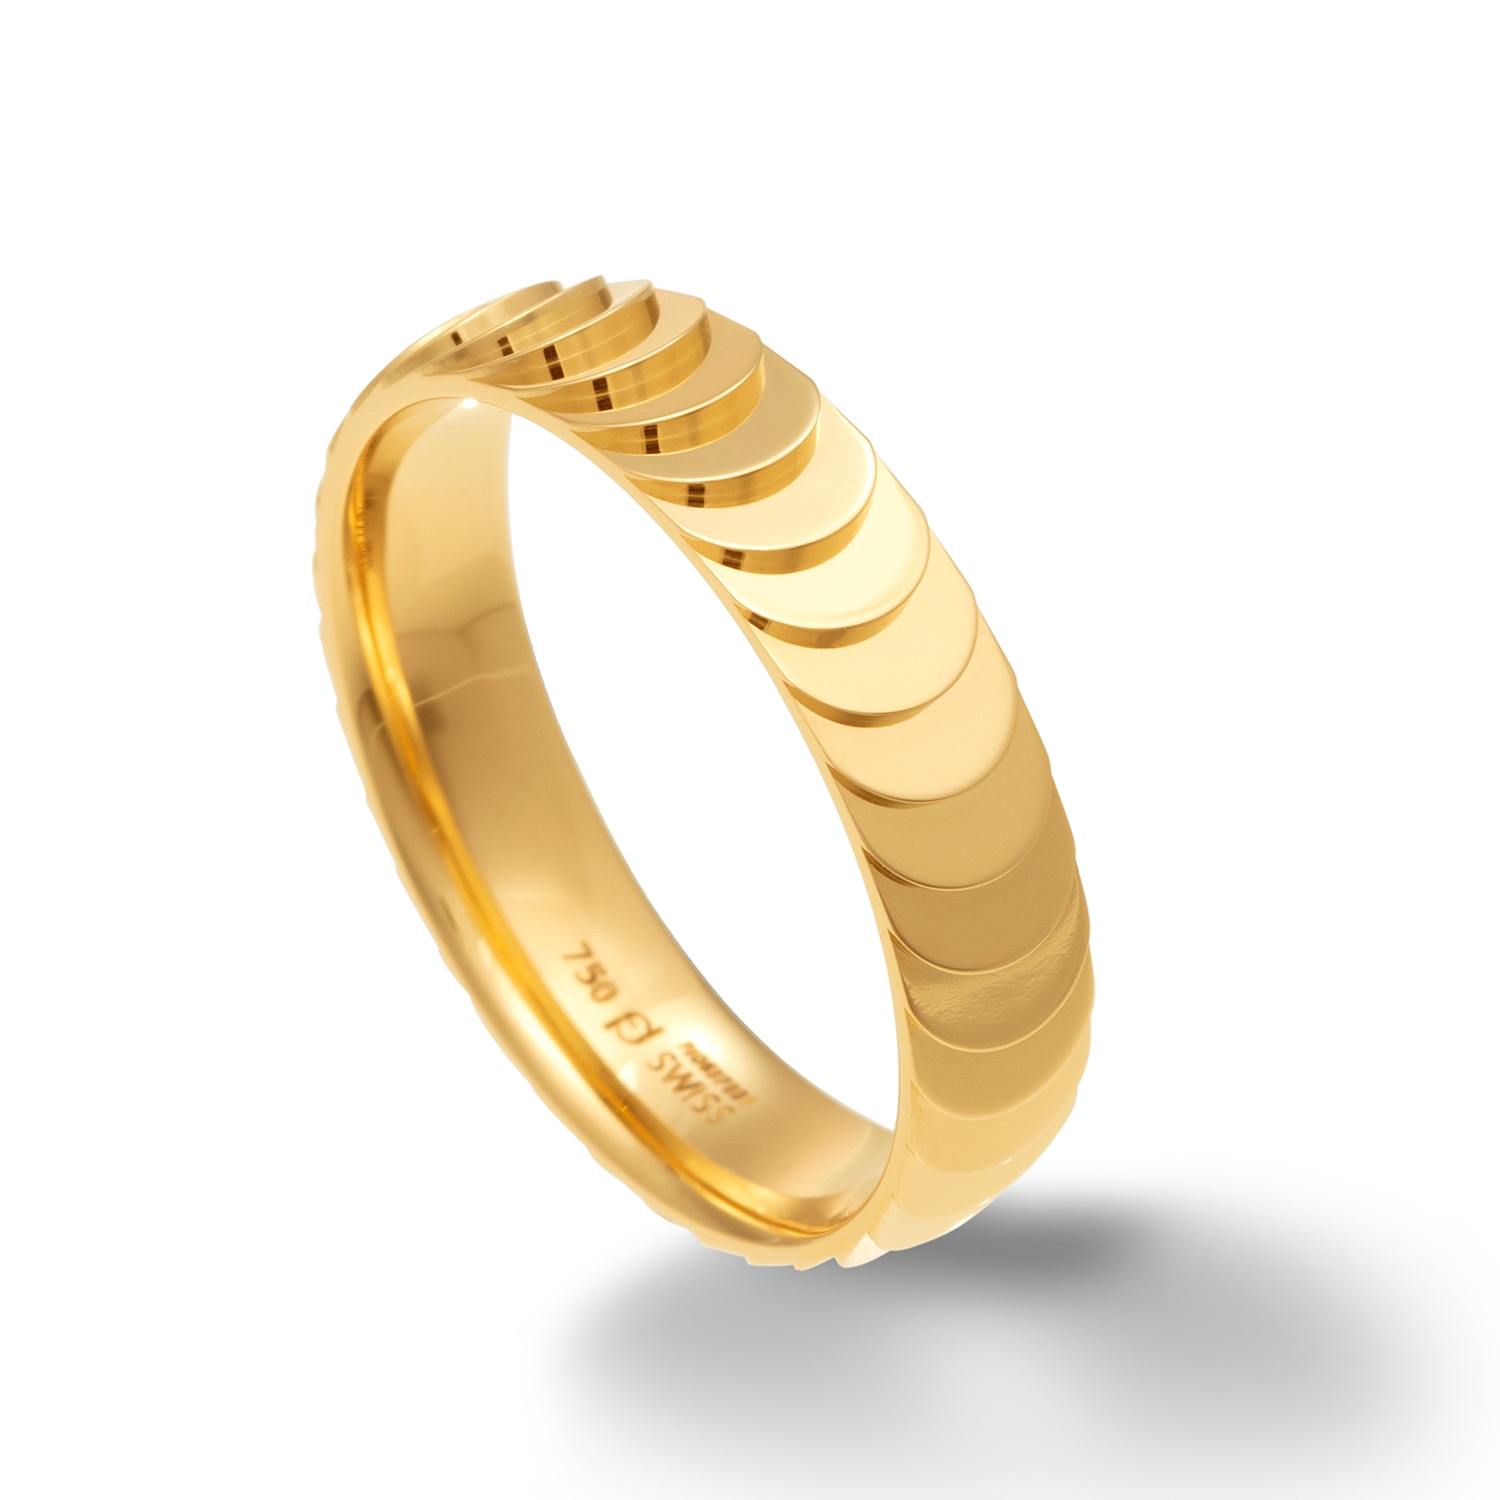 1 Gram Gold Plated Pink Stone Sophisticated Design Thumb Ring For Men -  Style B366, सोने का पानी चढ़ी हुई अंगूठी - Soni Fashion, Rajkot | ID:  2851531888897